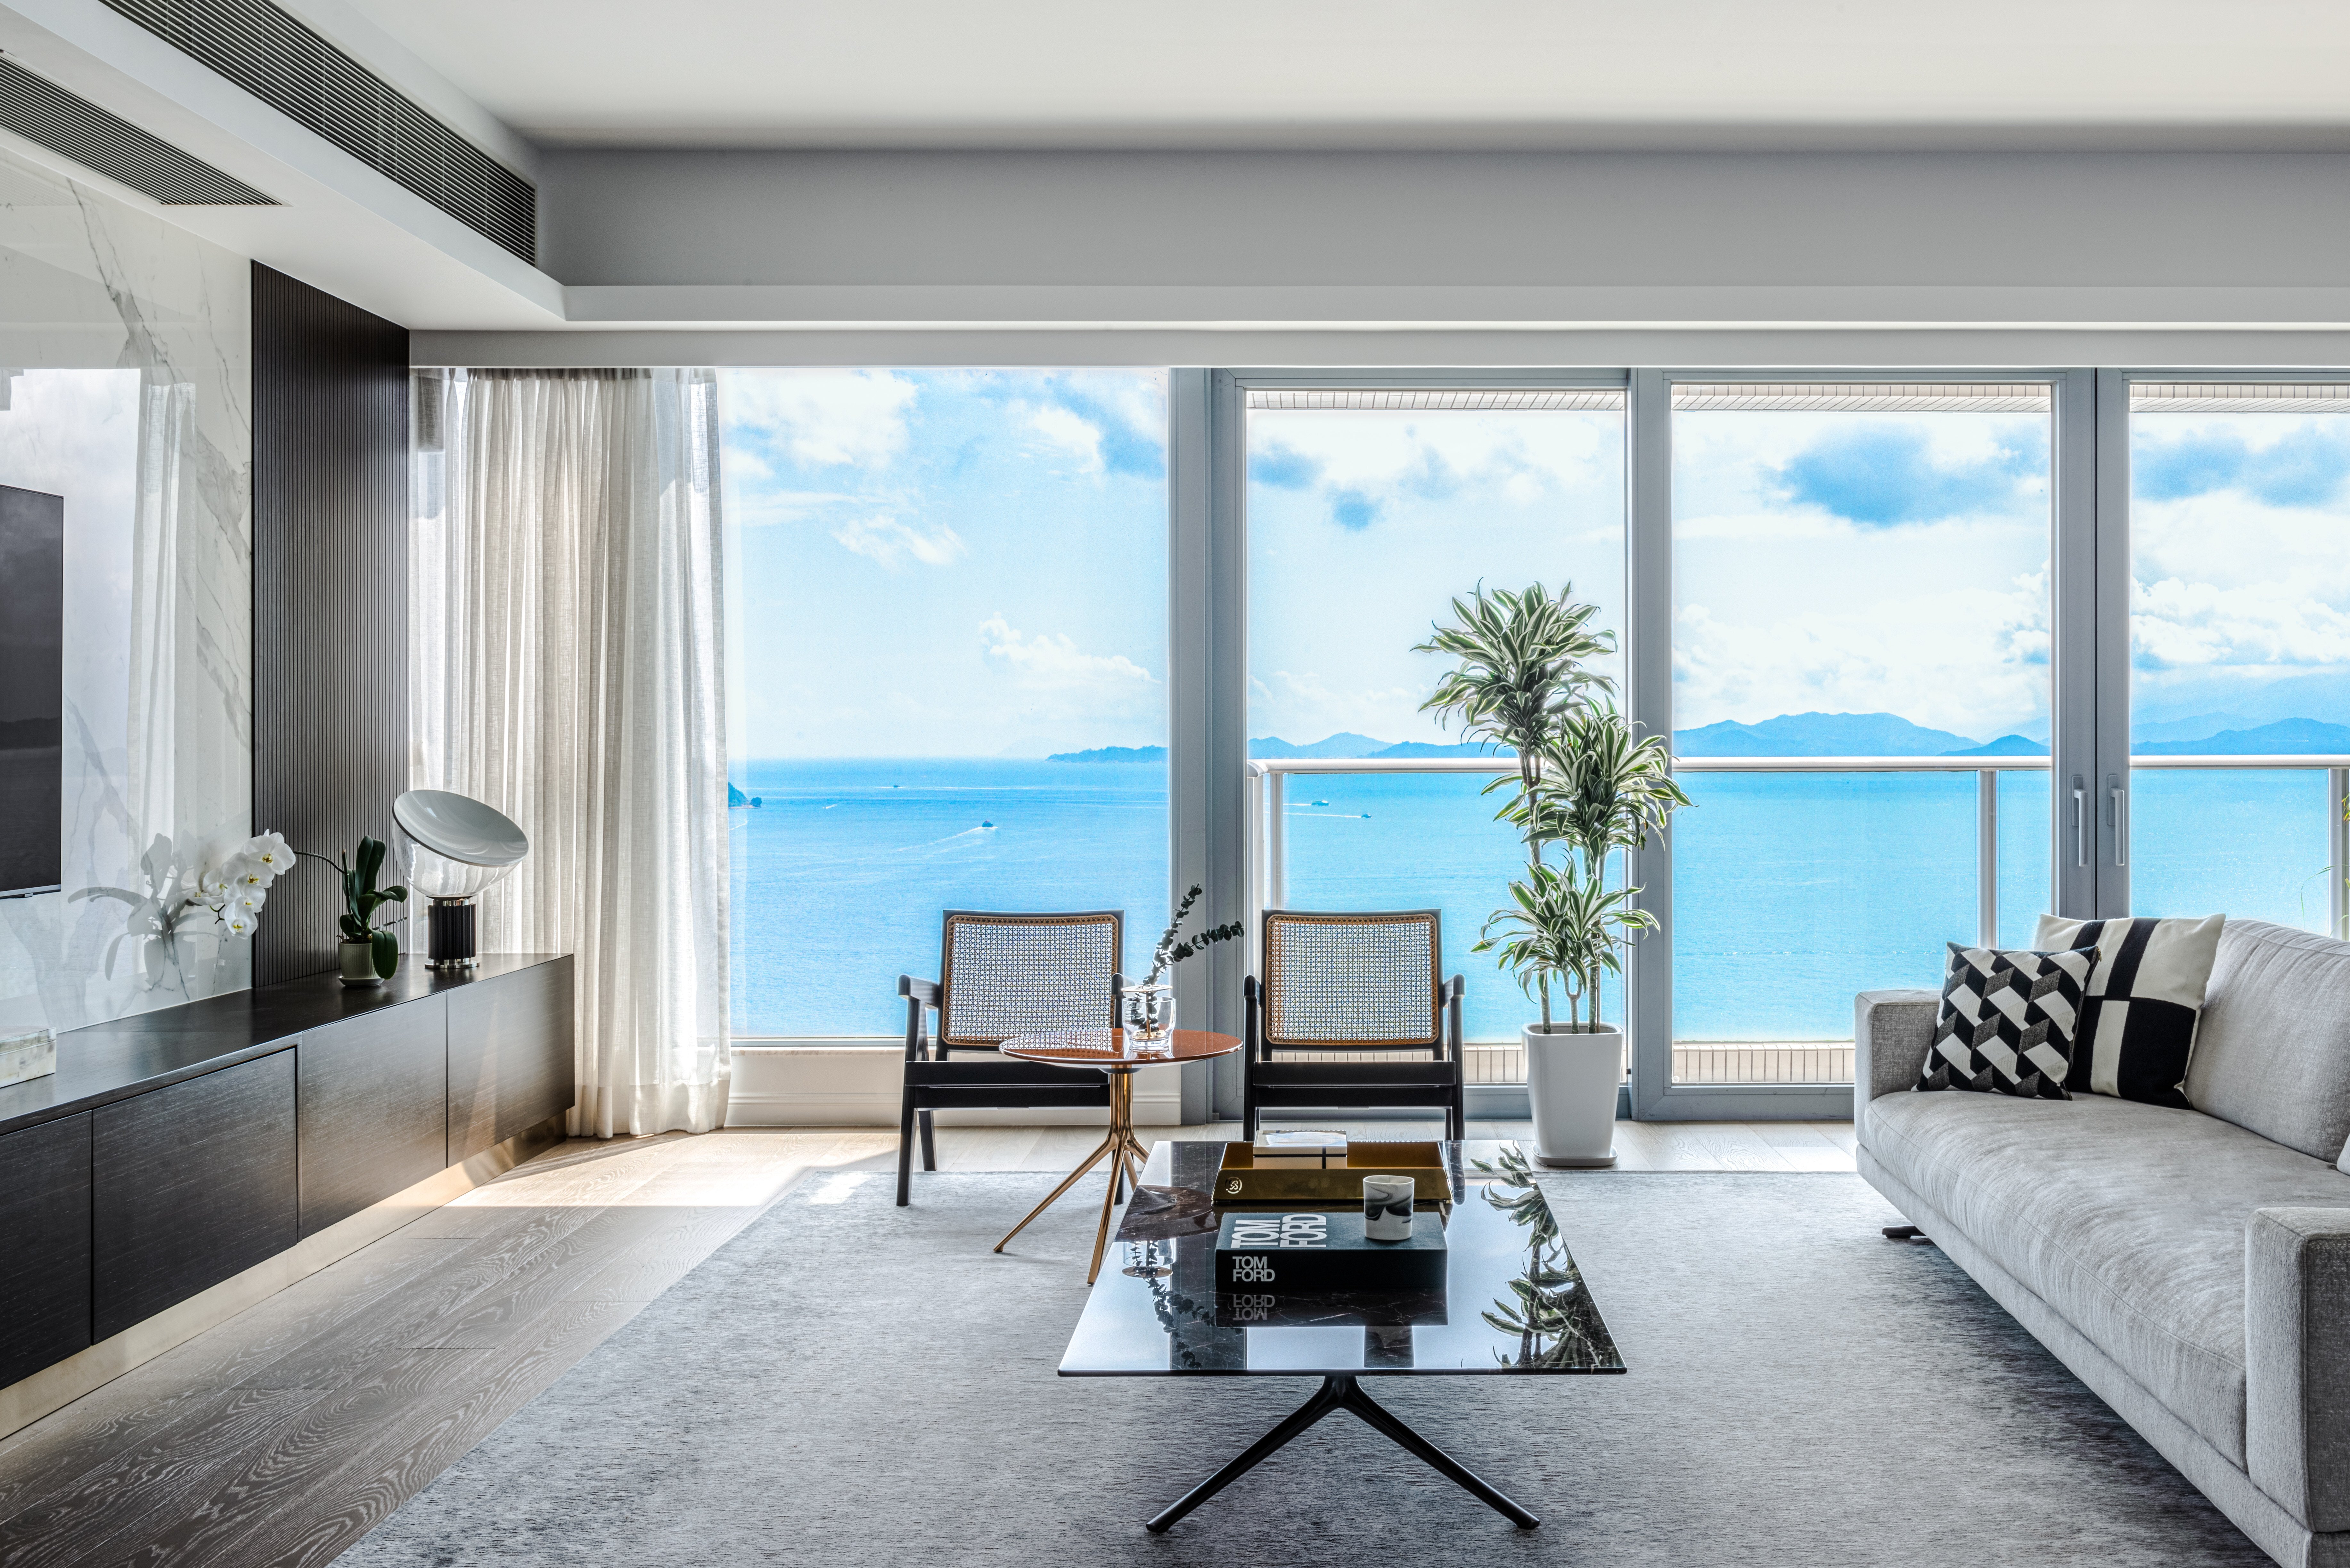 Hong Kong interior design studio hoo helped the interiors of this Pok Fu Lam flat live up to its views. Photography: hoo